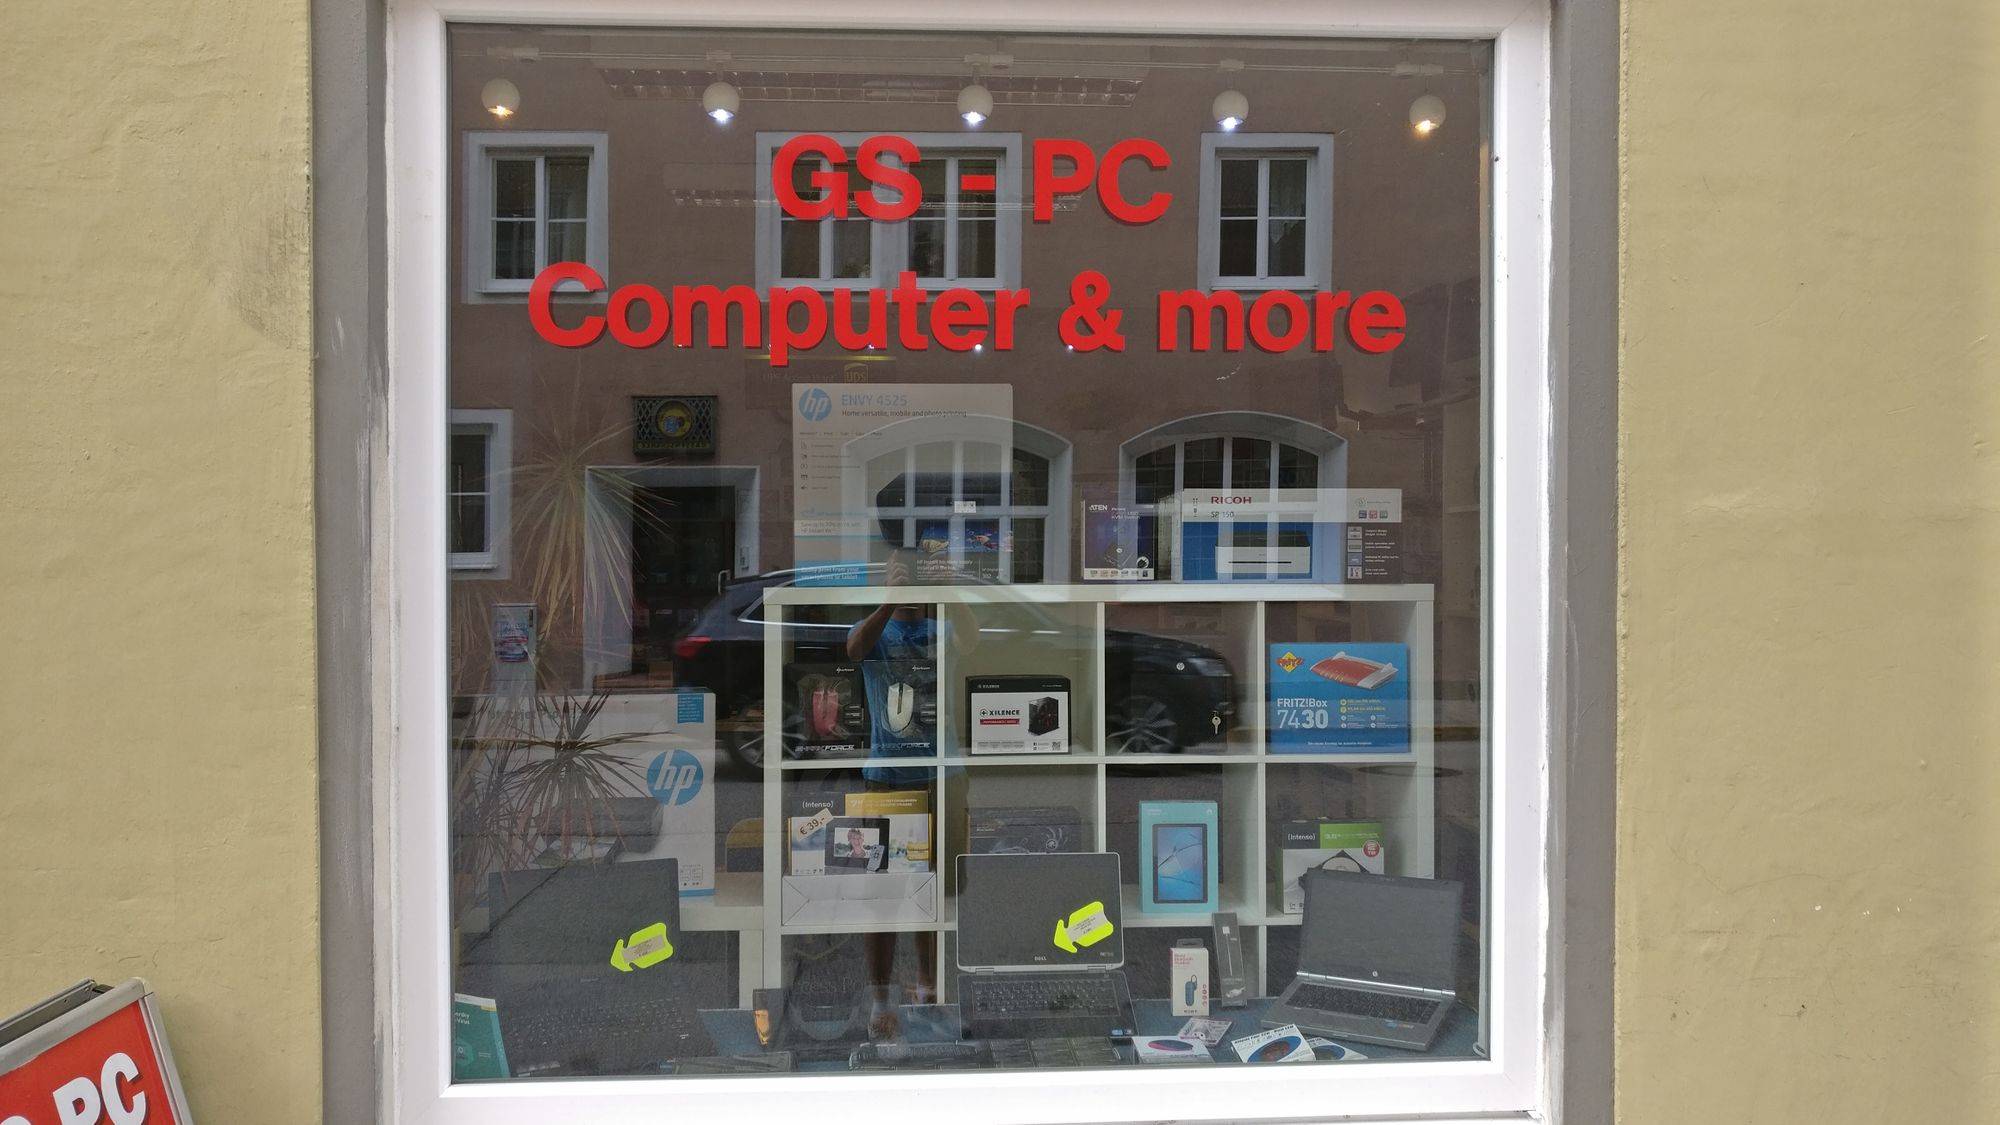 GS-PC Computer & more